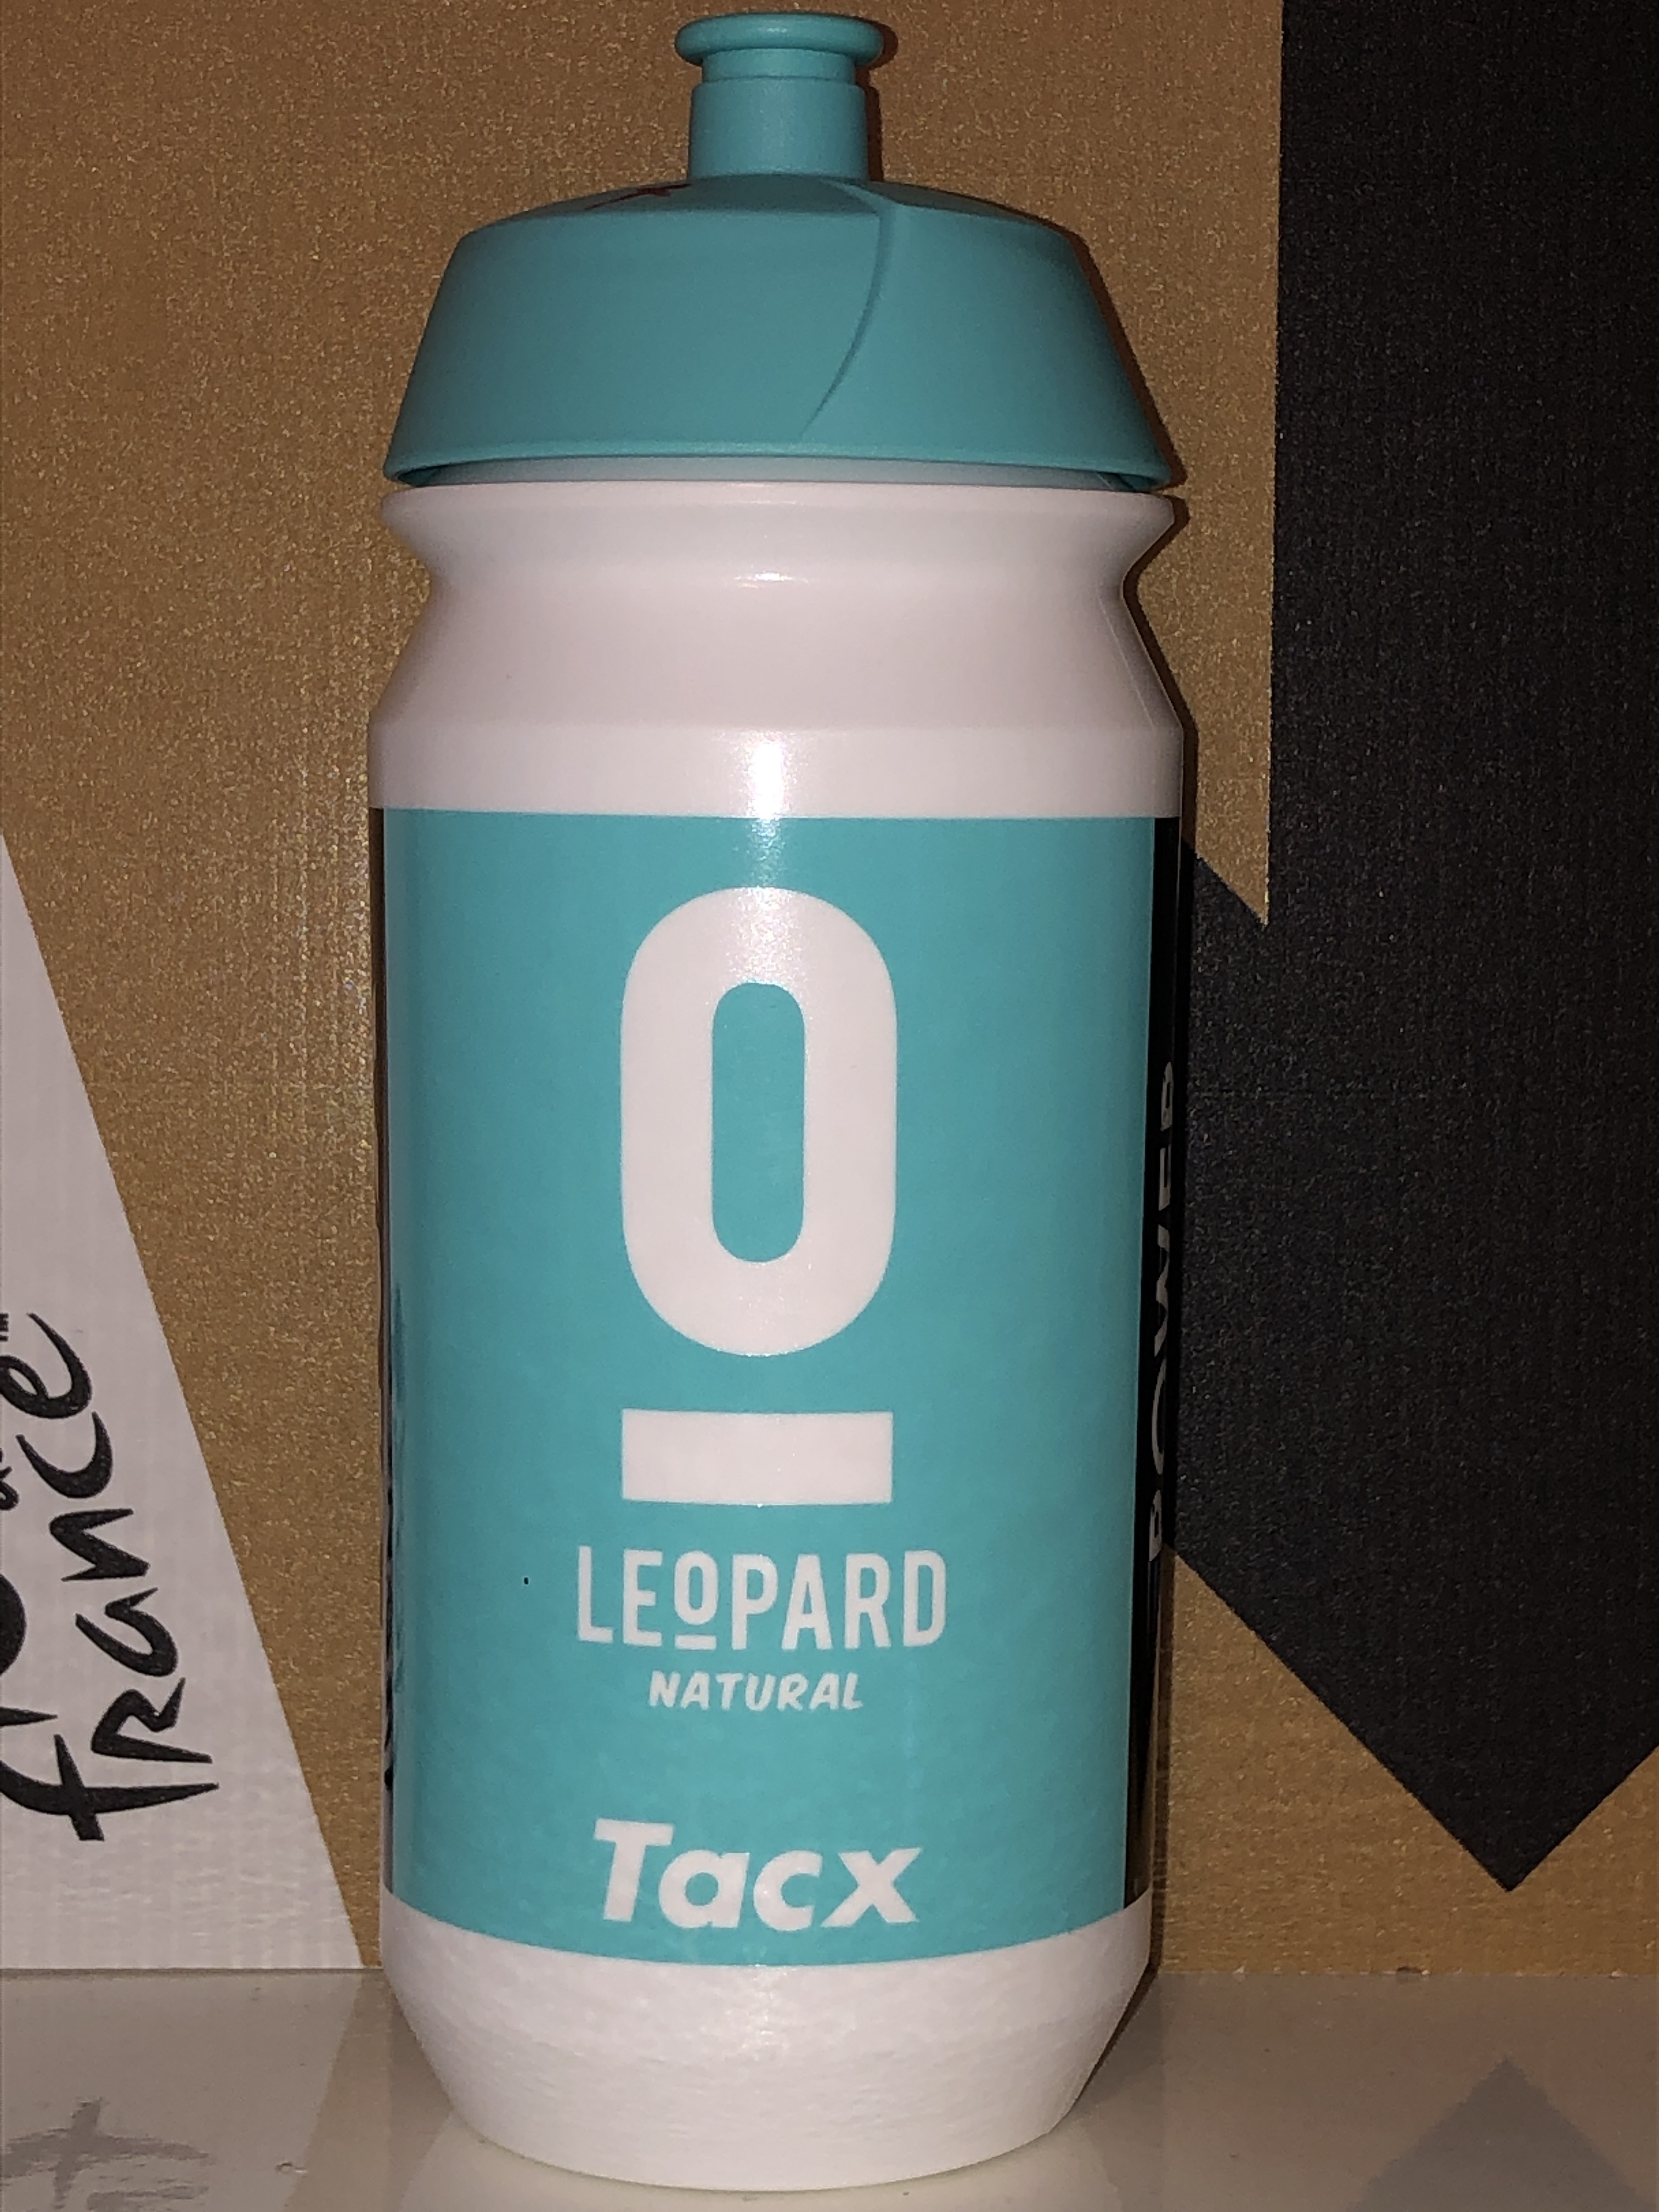 Tacx Shiva - Leopard Pro Cycling - 2021